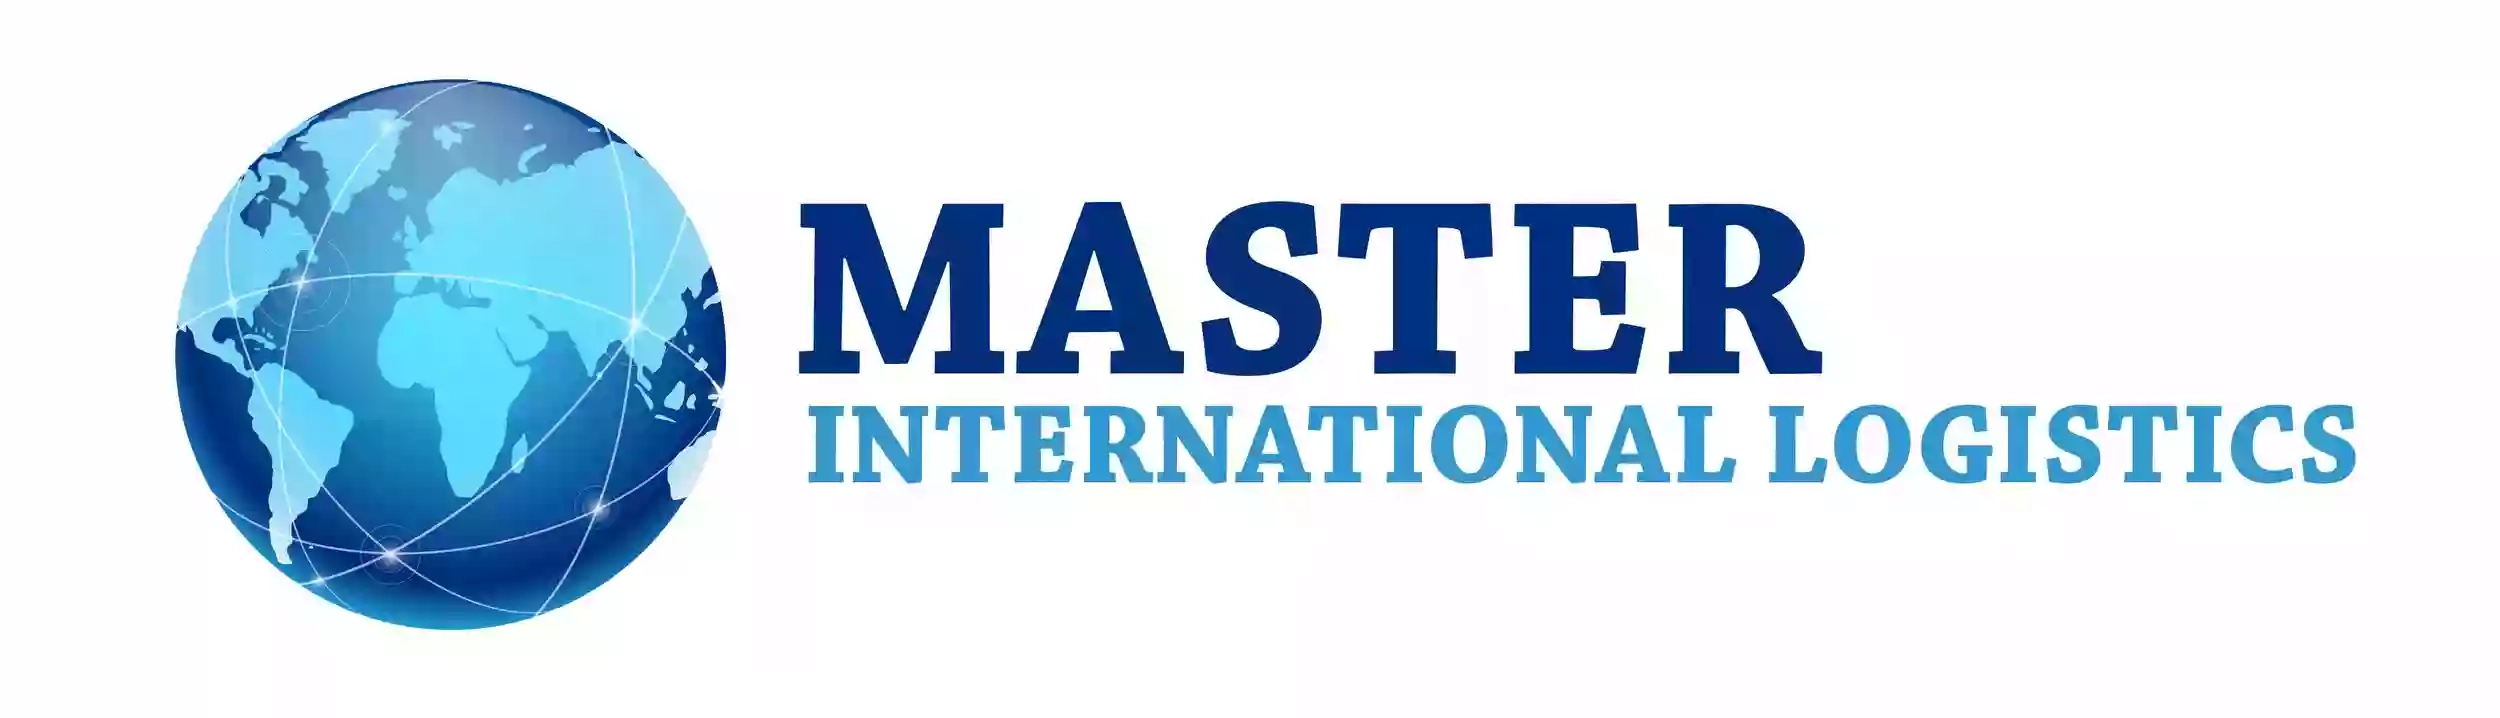 Master International Logistics Srl